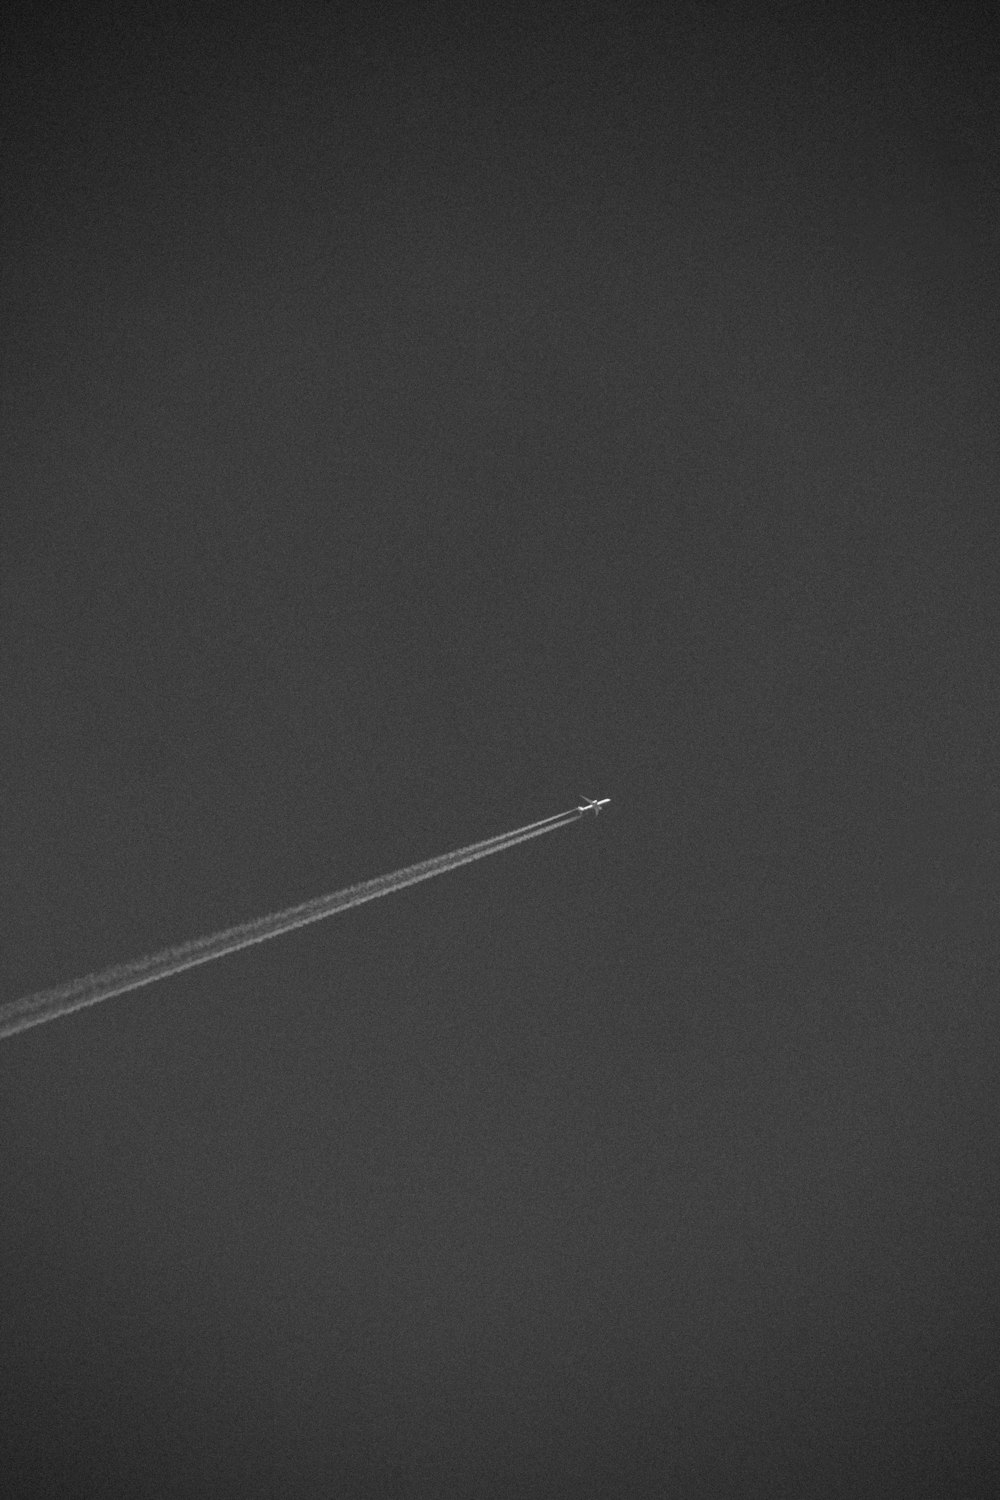 grayscale photo of jetplane